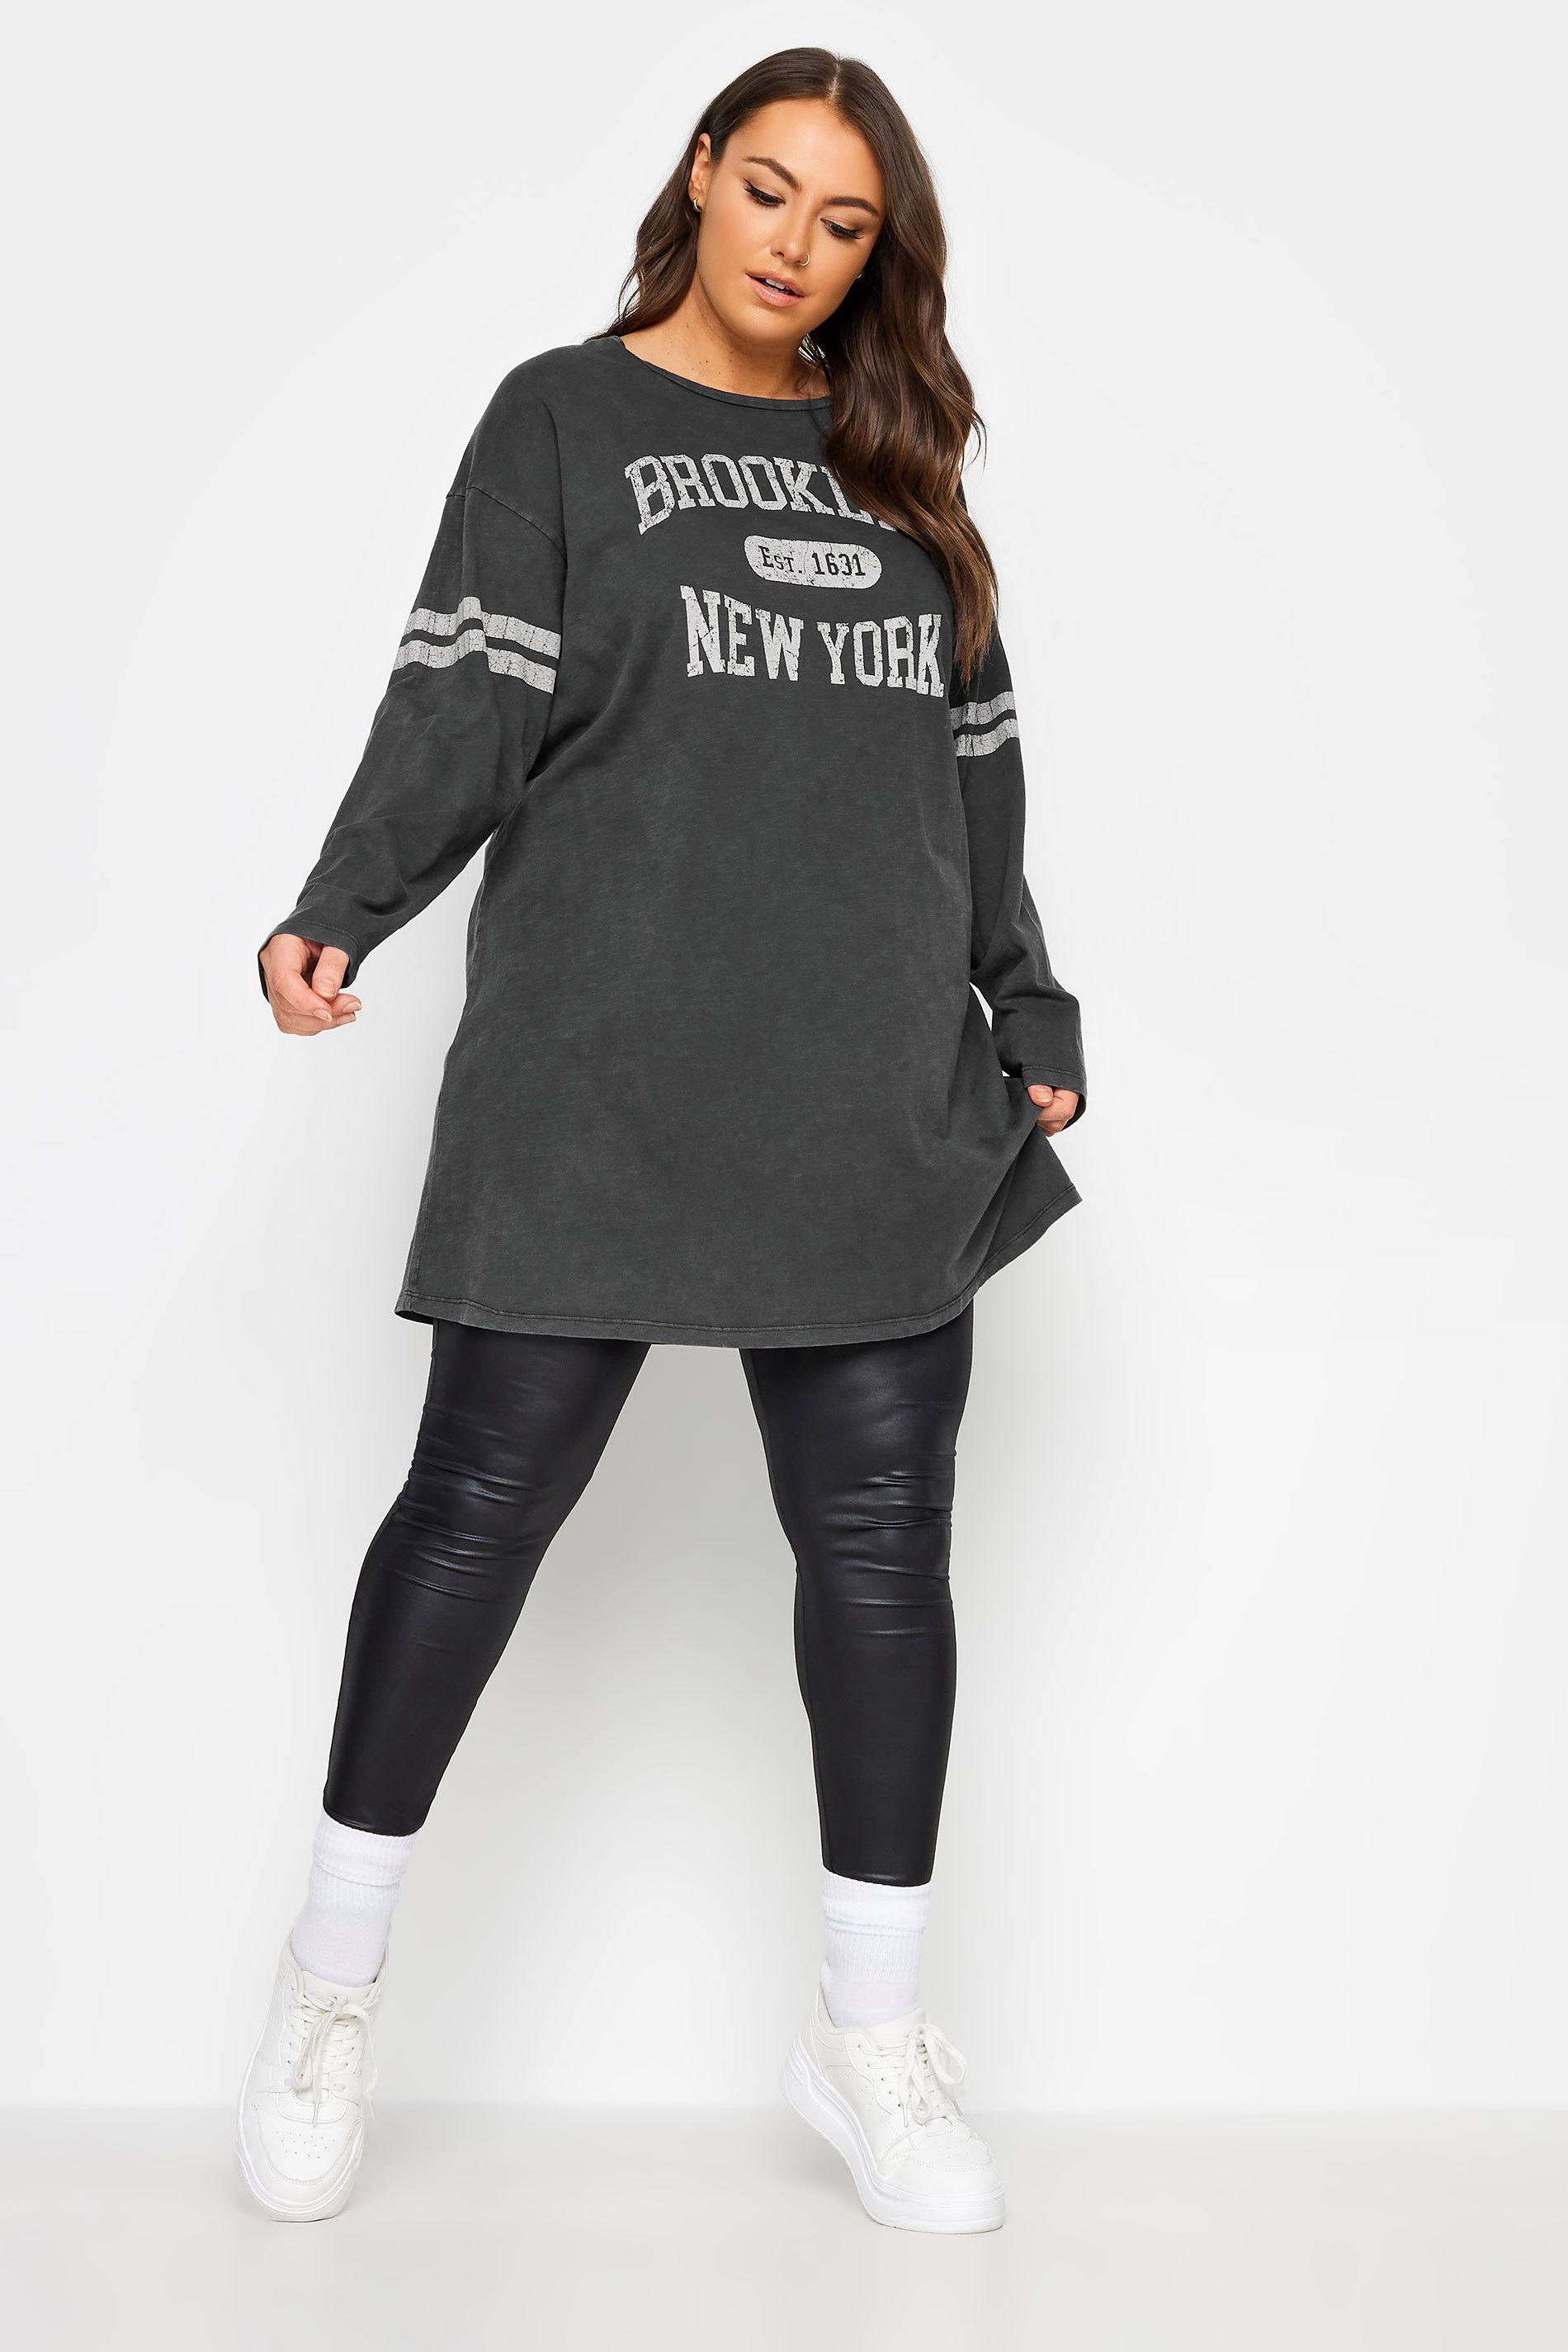 YOURS Plus Size Grey Acid Wash 'Brooklyn' Slogan T-Shirt | Yours Clothing 2